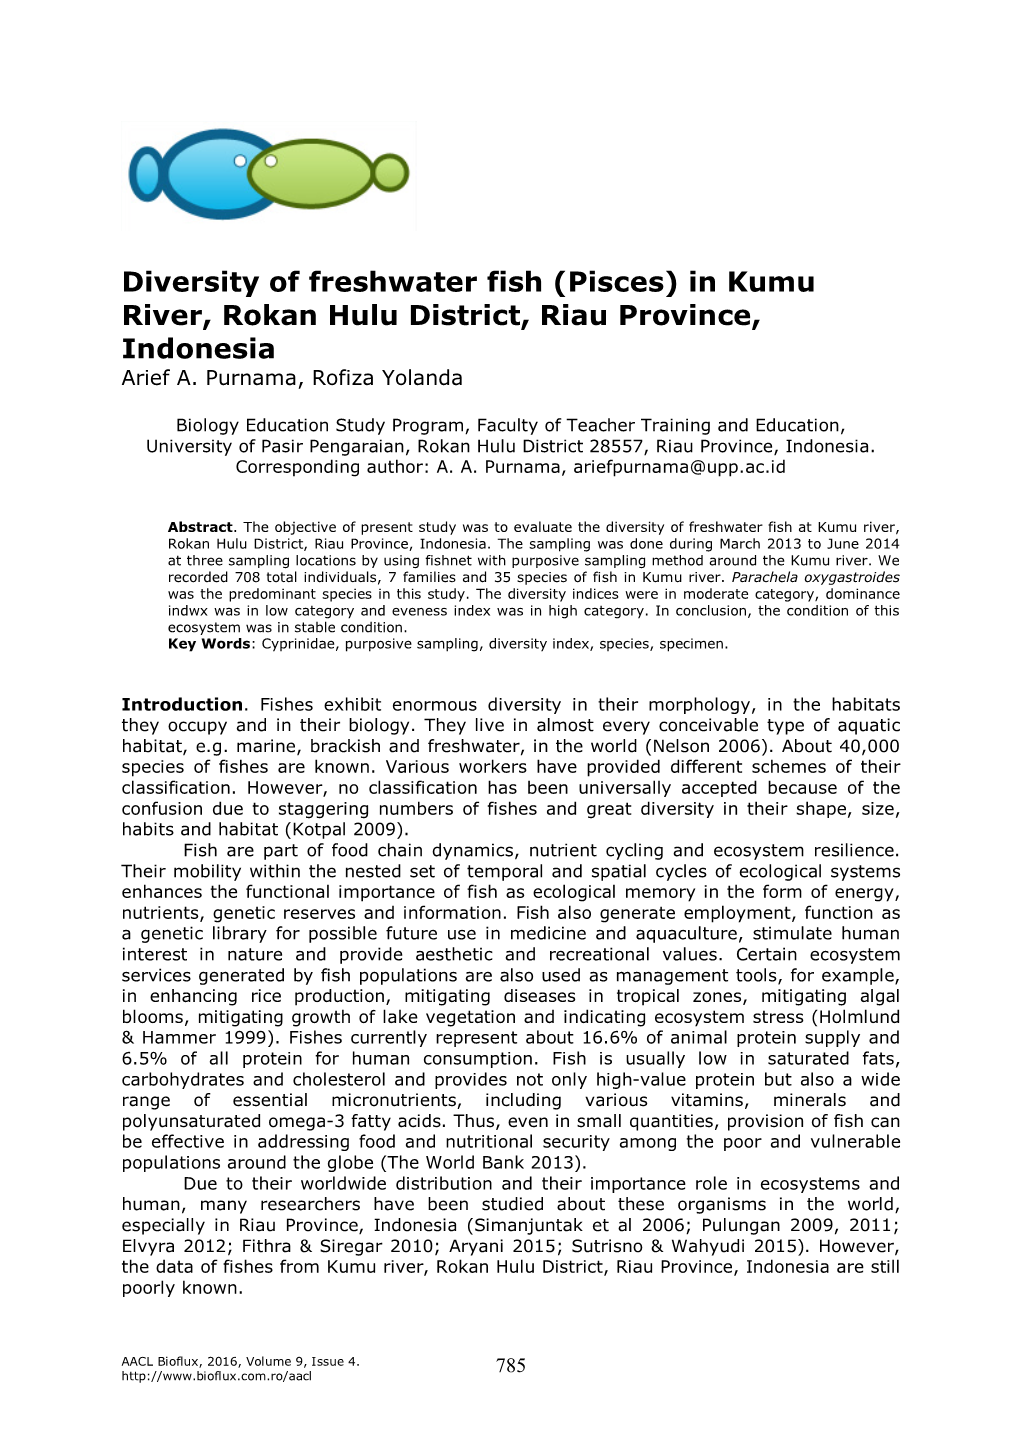 Diversity of Freshwater Fish (Pisces) in Kumu River, Rokan Hulu District, Riau Province, Indonesia Arief A